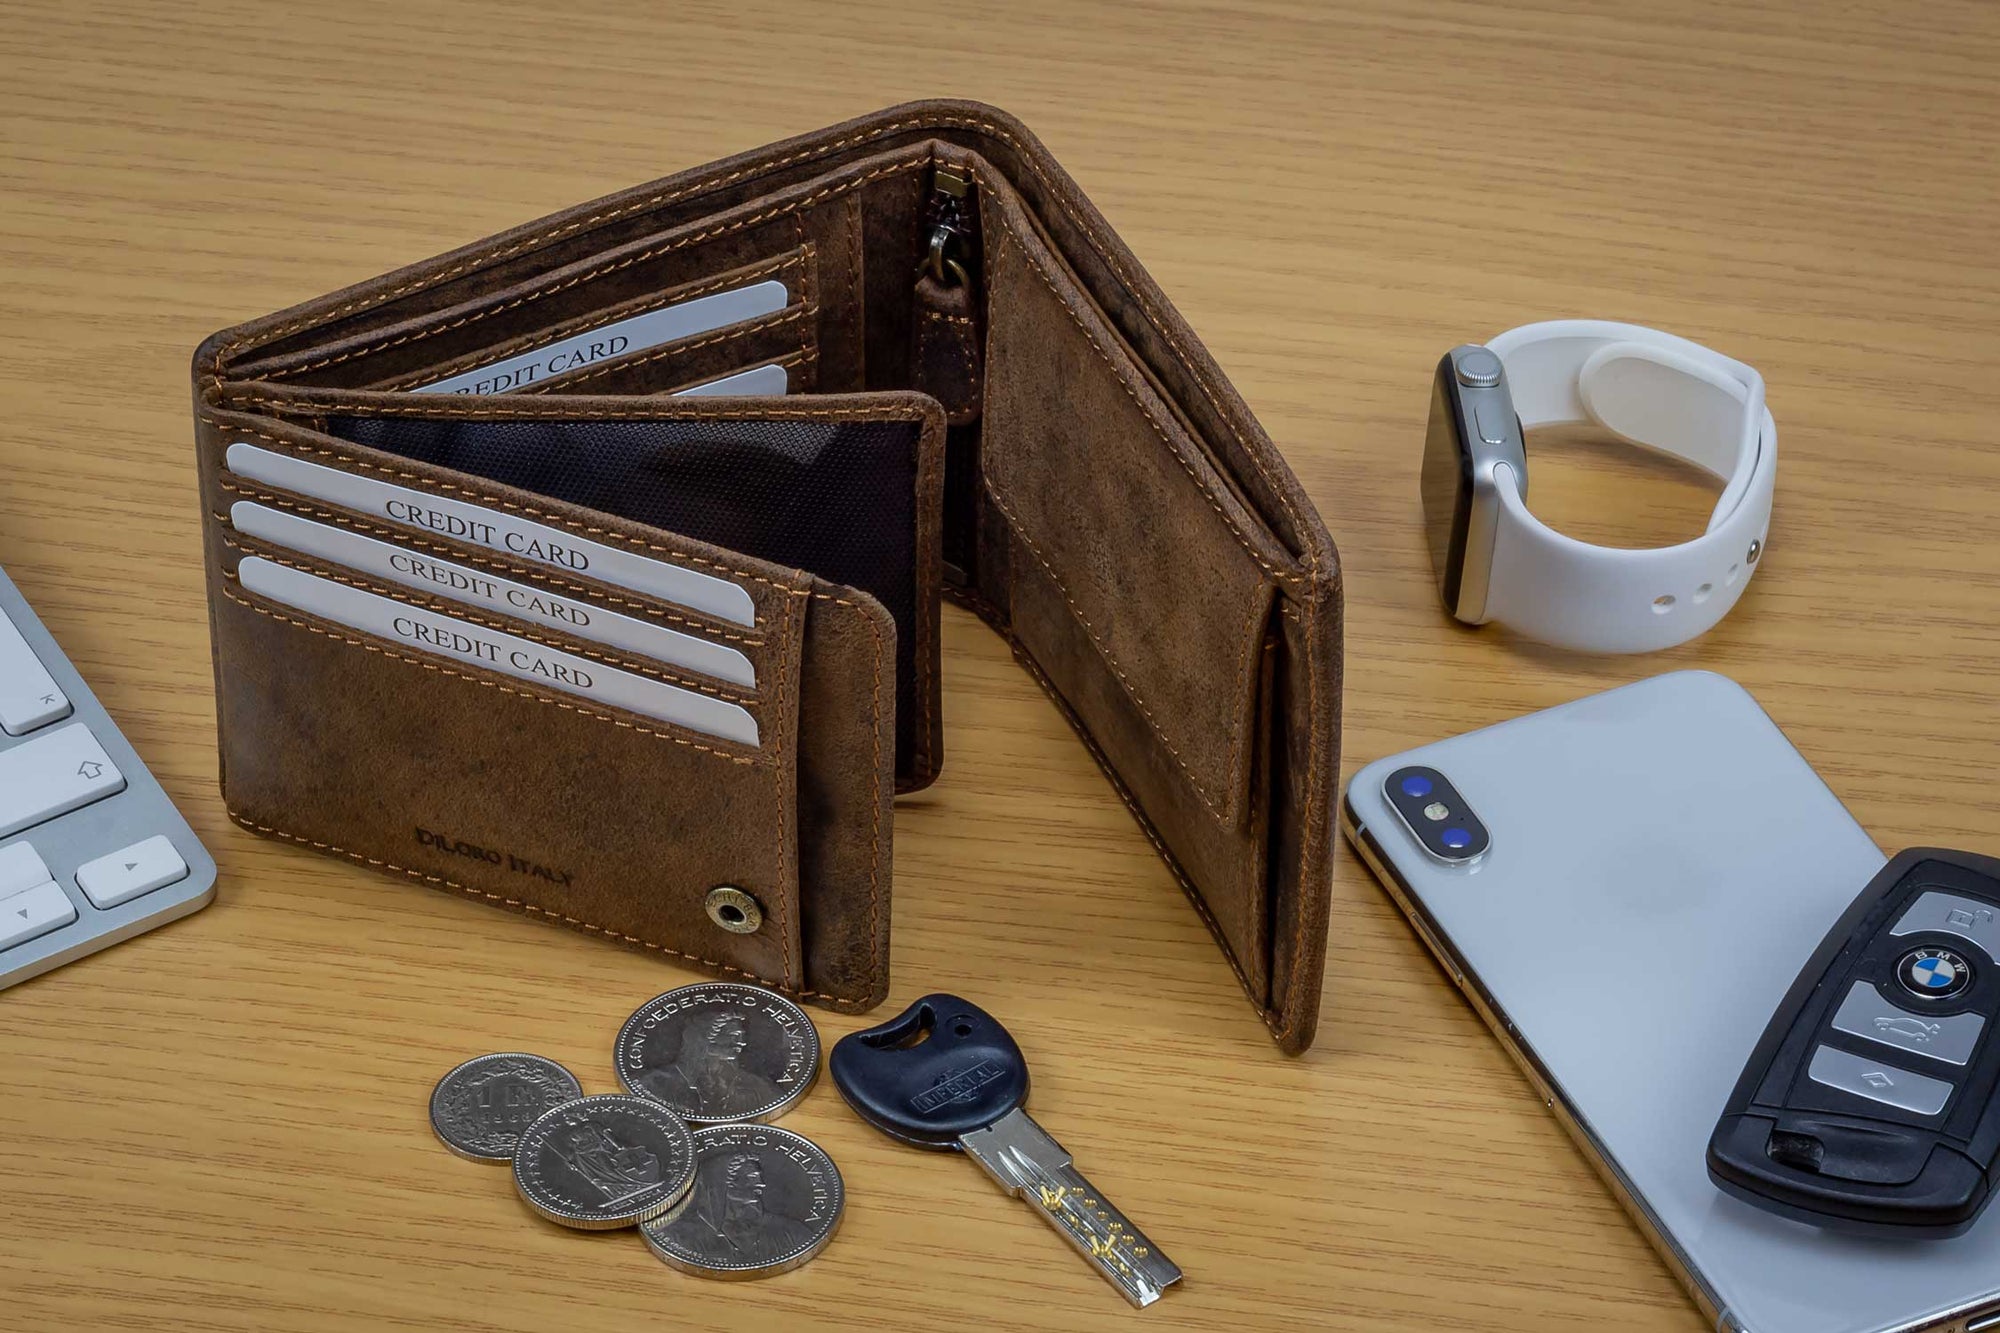 DiLoro Men's Leather Bifold Wallet